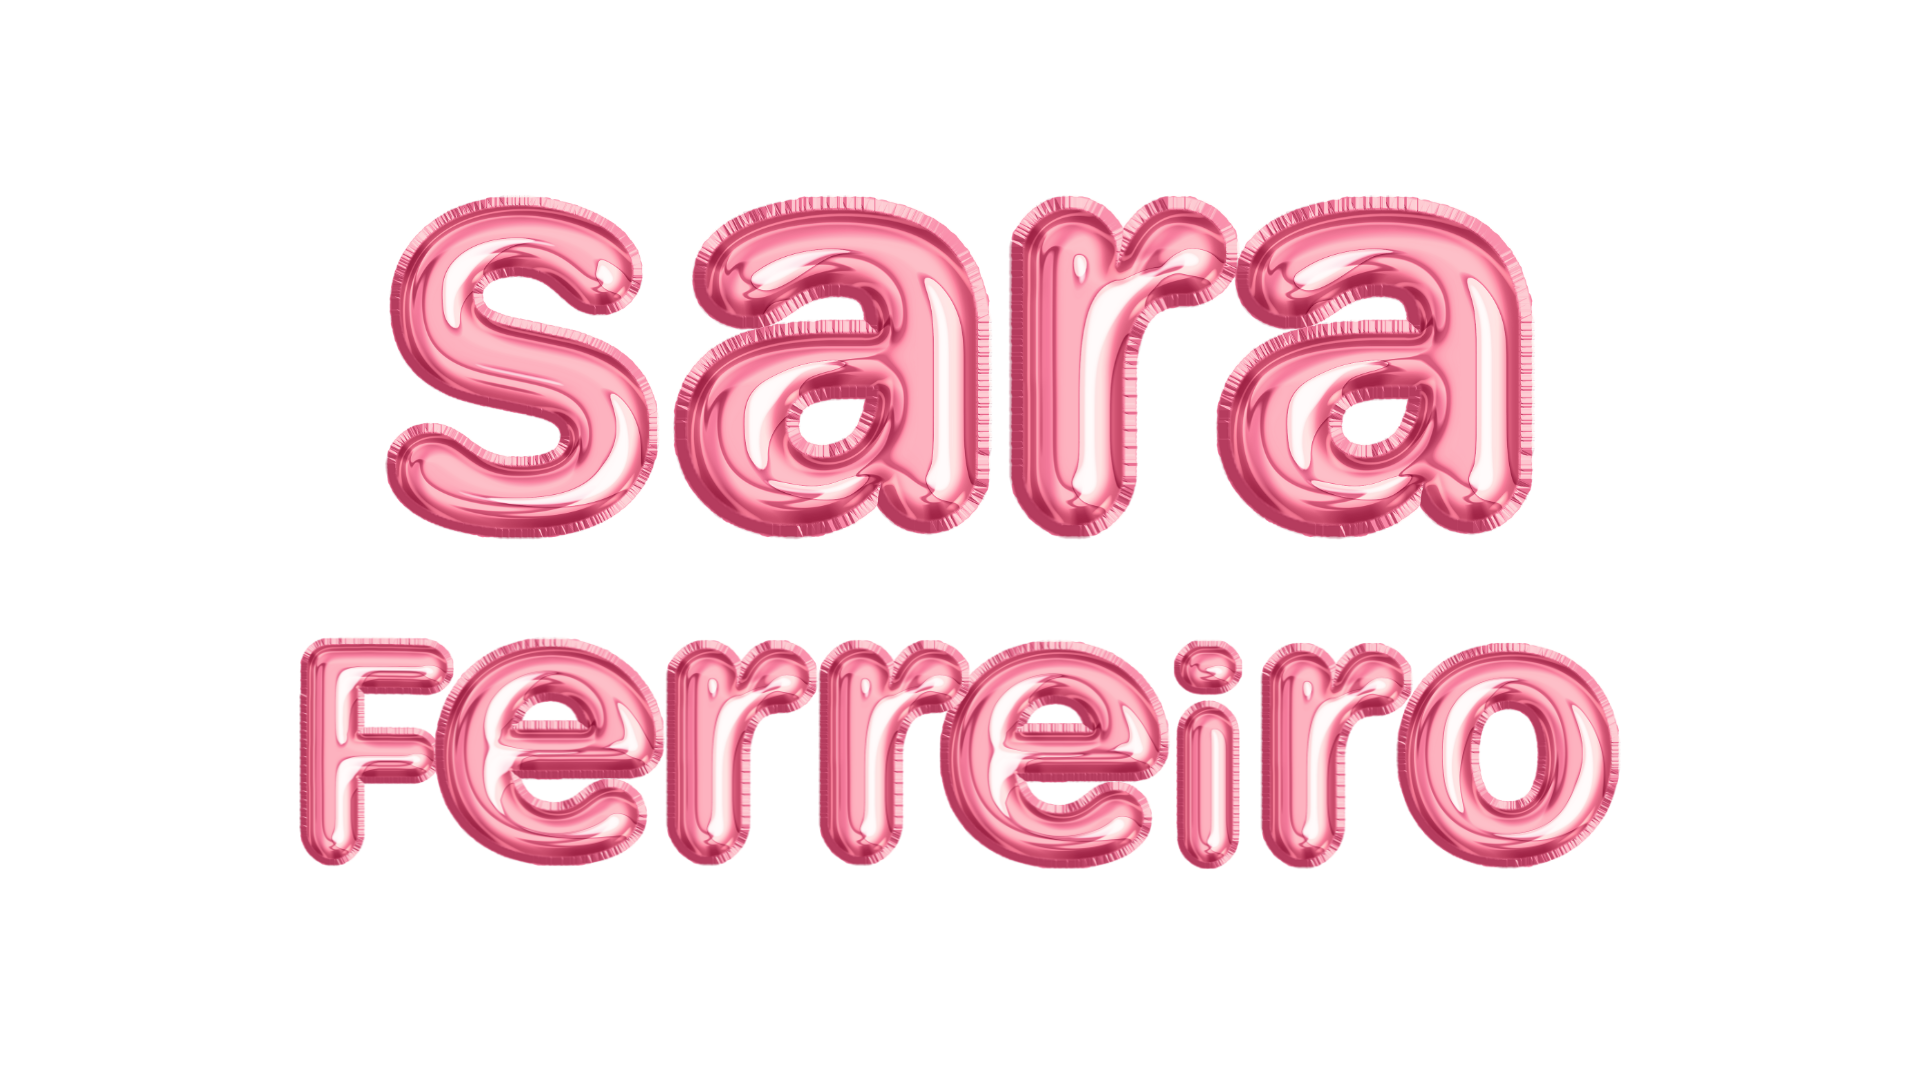 Sara-Ferreiro <3 image: 4